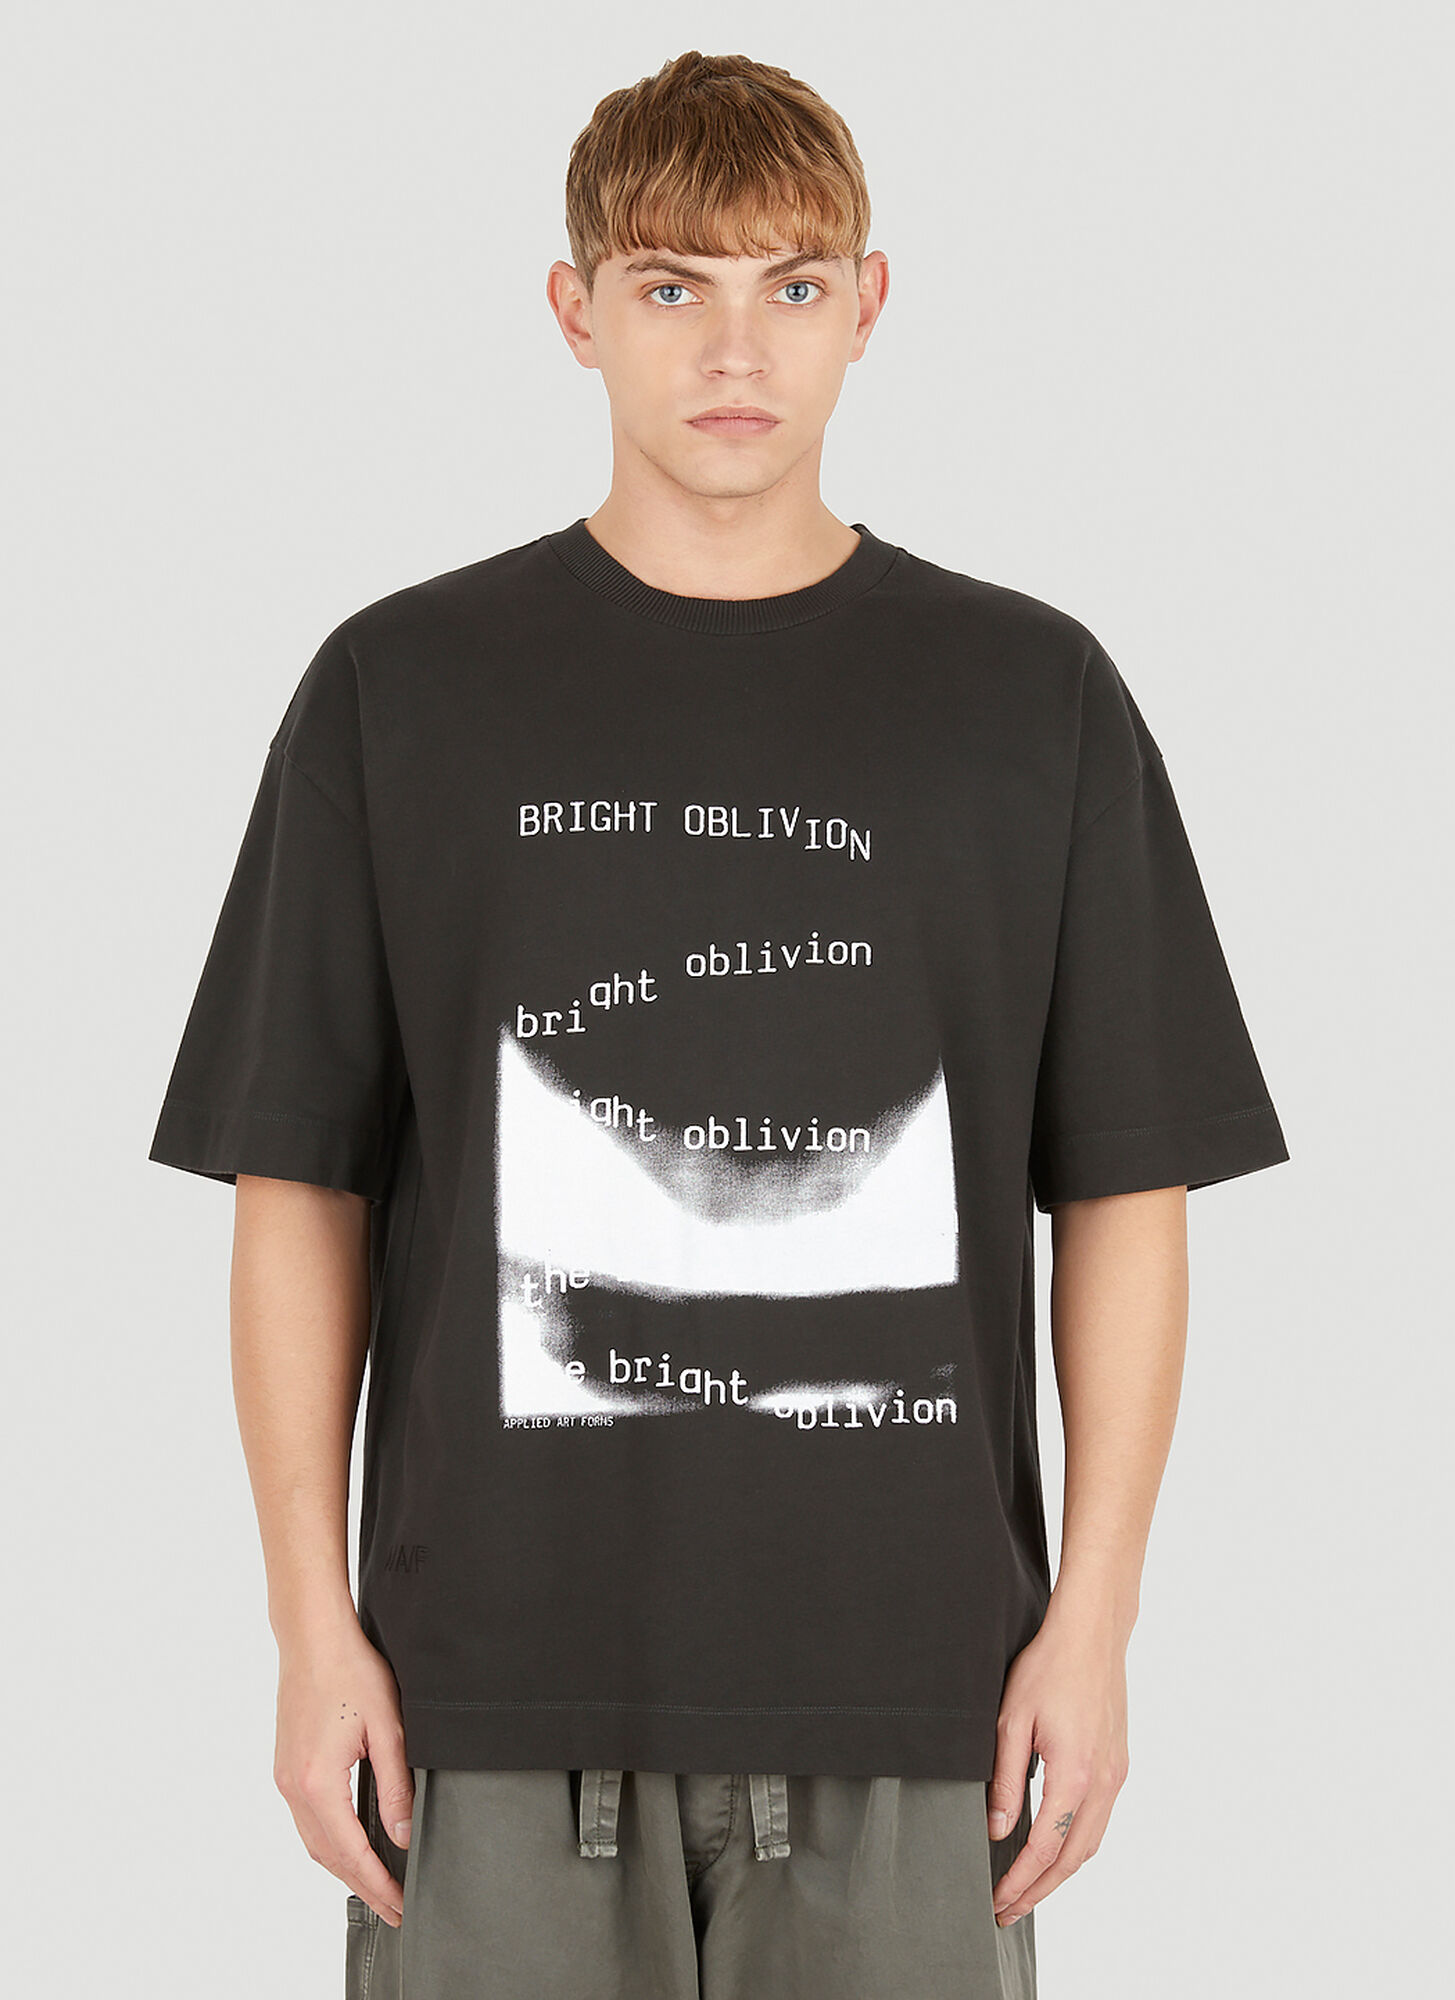 Applied Art Forms Oblivion T-shirt Male Black